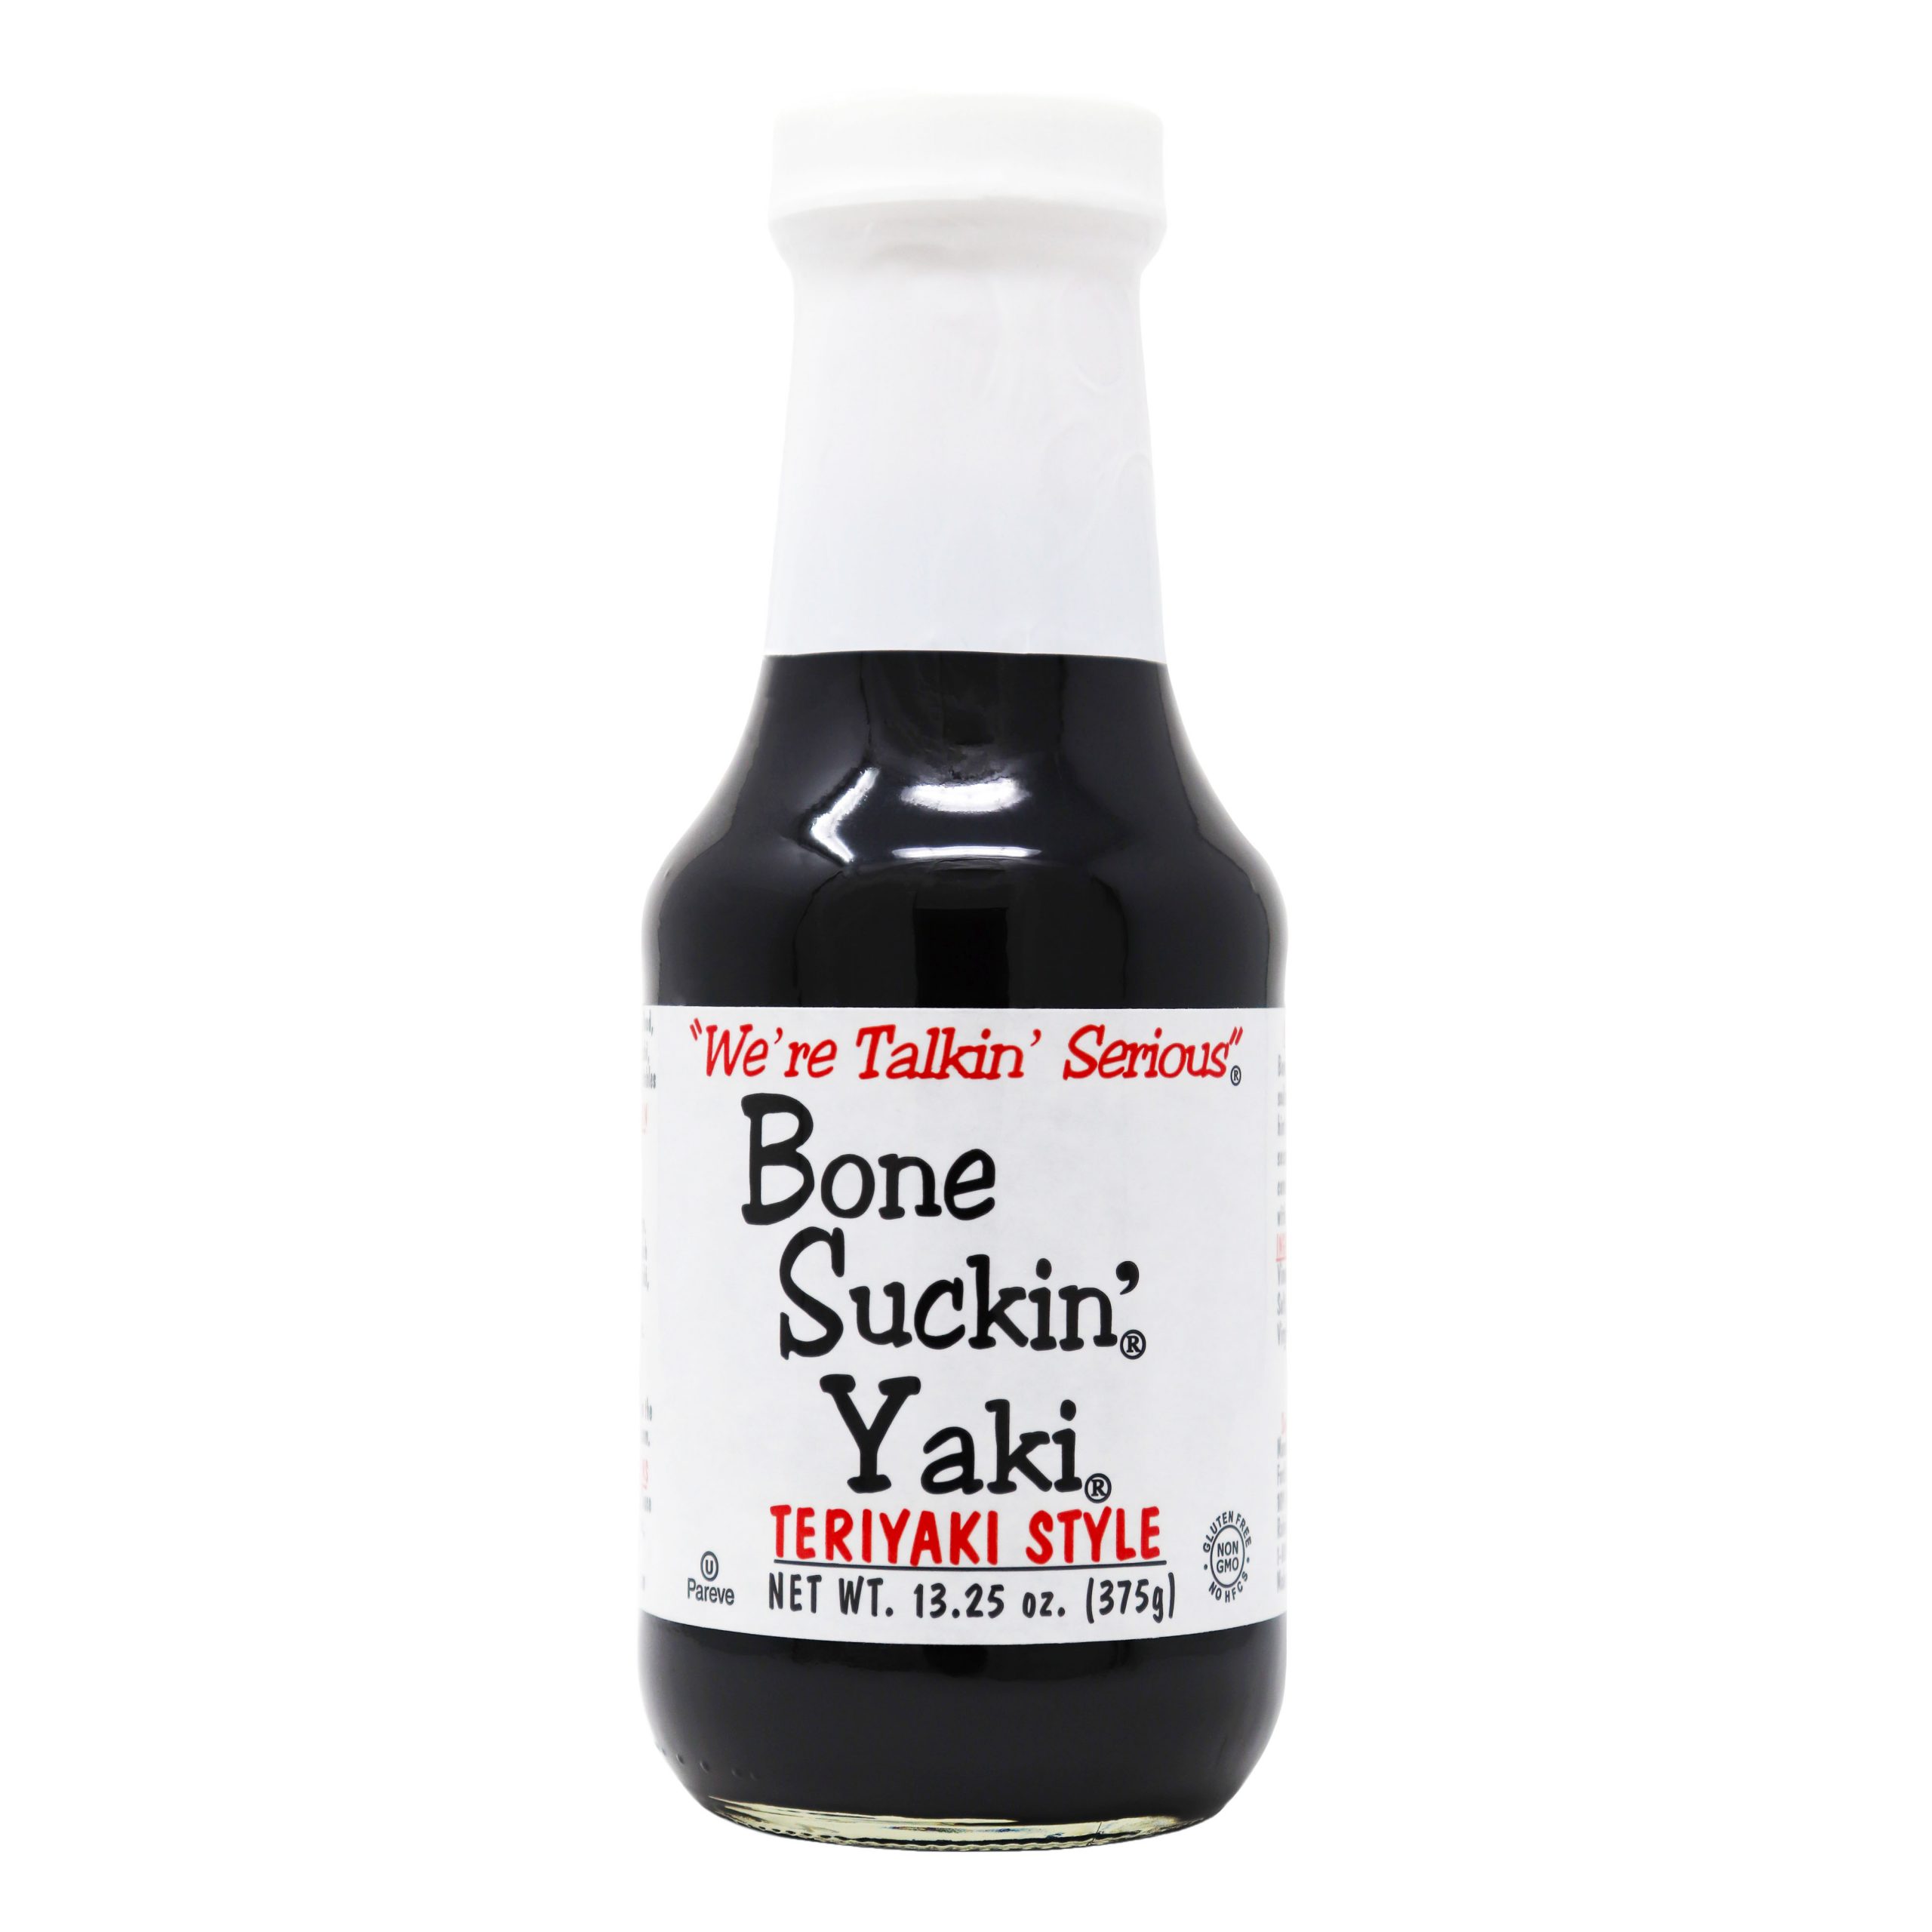  Bone Suckin' Yaki Teriyaki Style - 13.25 oz in Glass Bottle. For Pork Tenderloin, Salmon, Thin Cut Steaks, Stir Fry - Made w/ Tamari Soy Sauce, Balsamic Vinegar & Olive Oil. Gluten Free, Non-Gmo, Kosher - 1 Jar